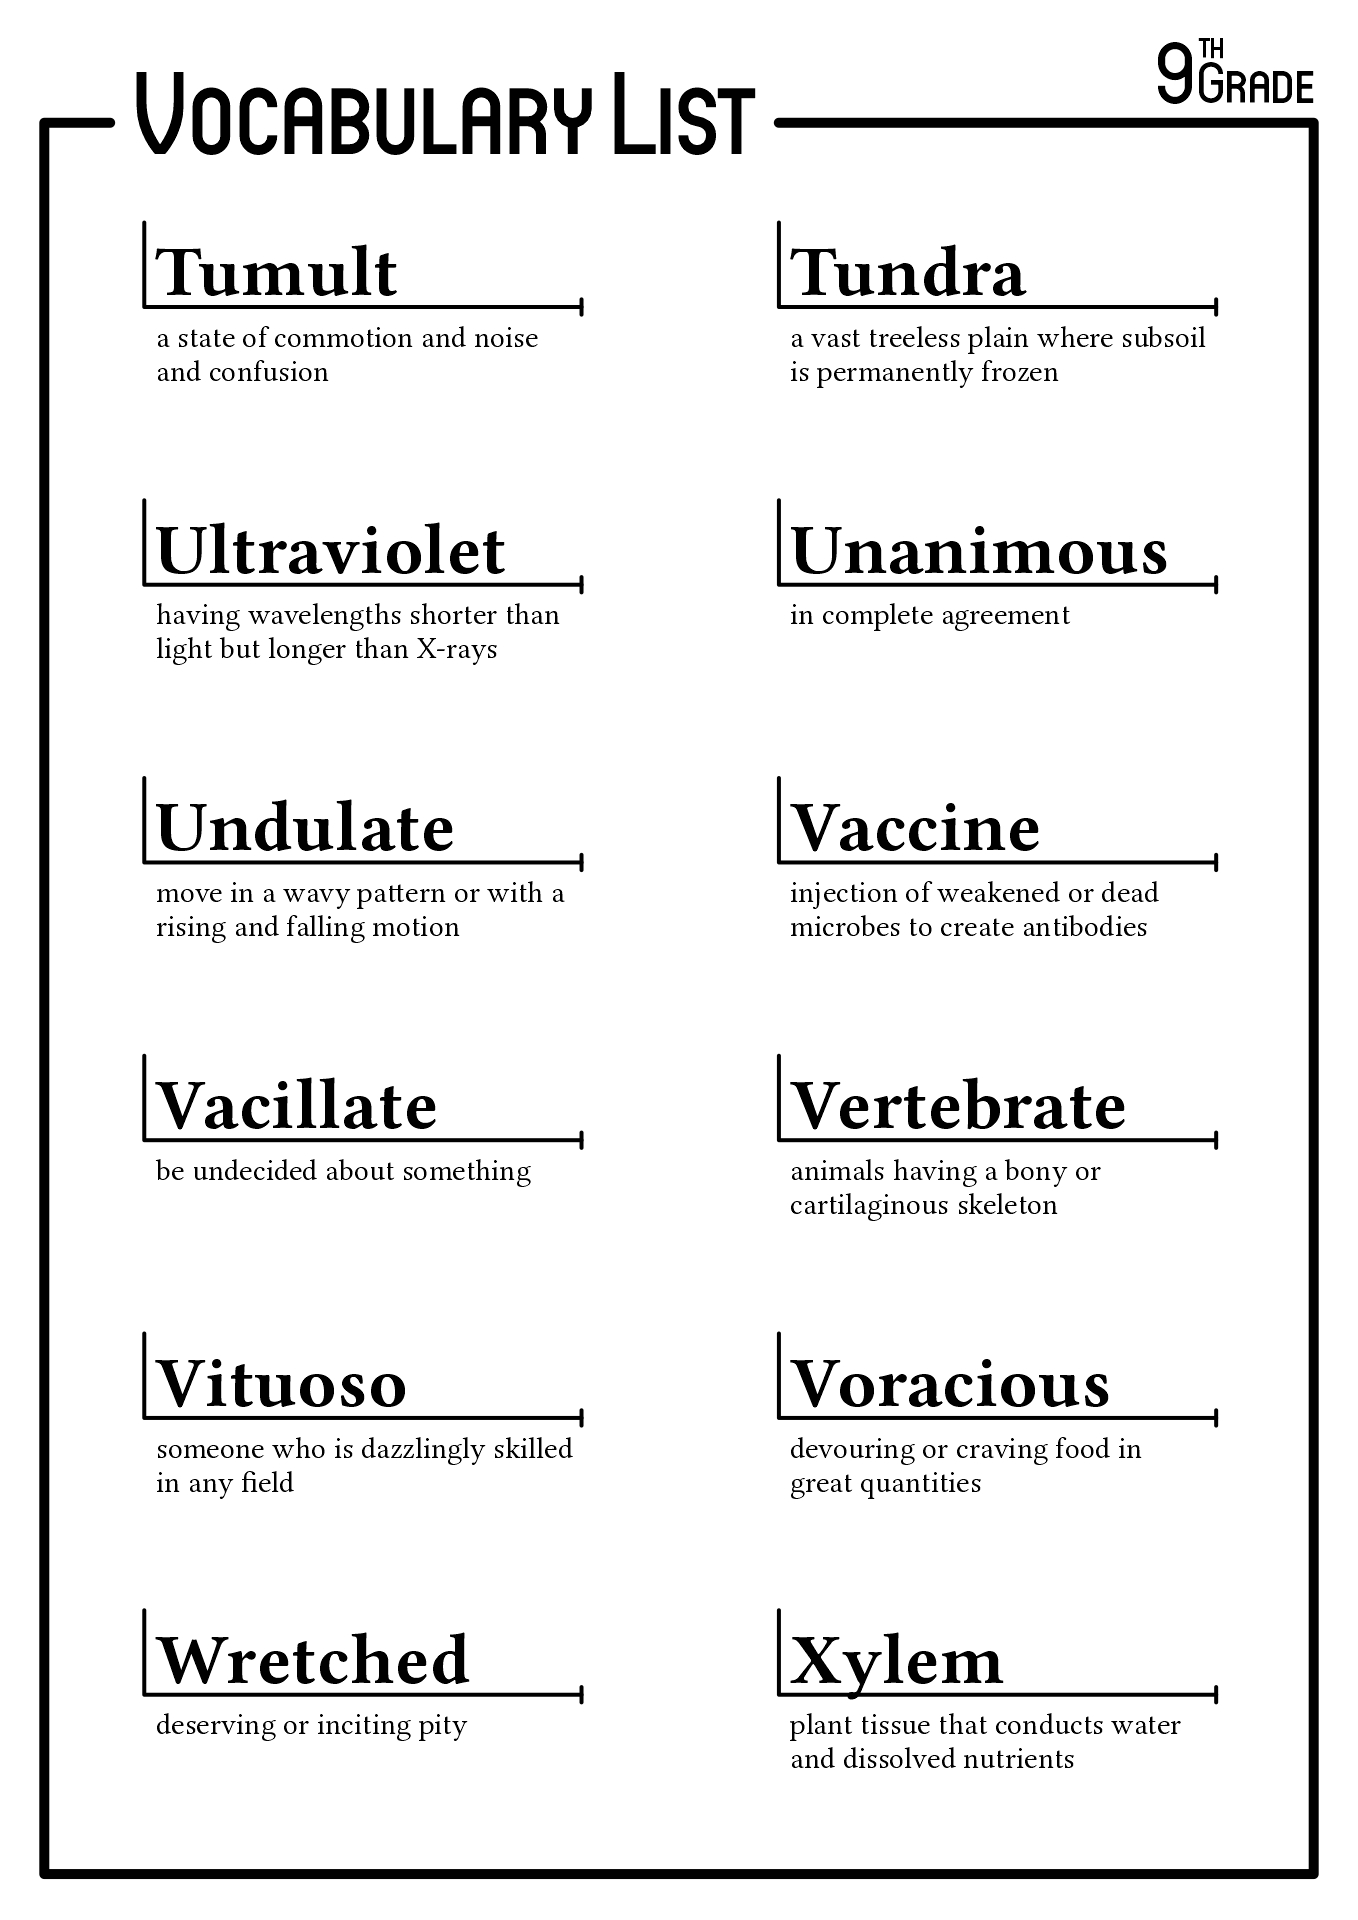 9th Grade English Vocabulary Image